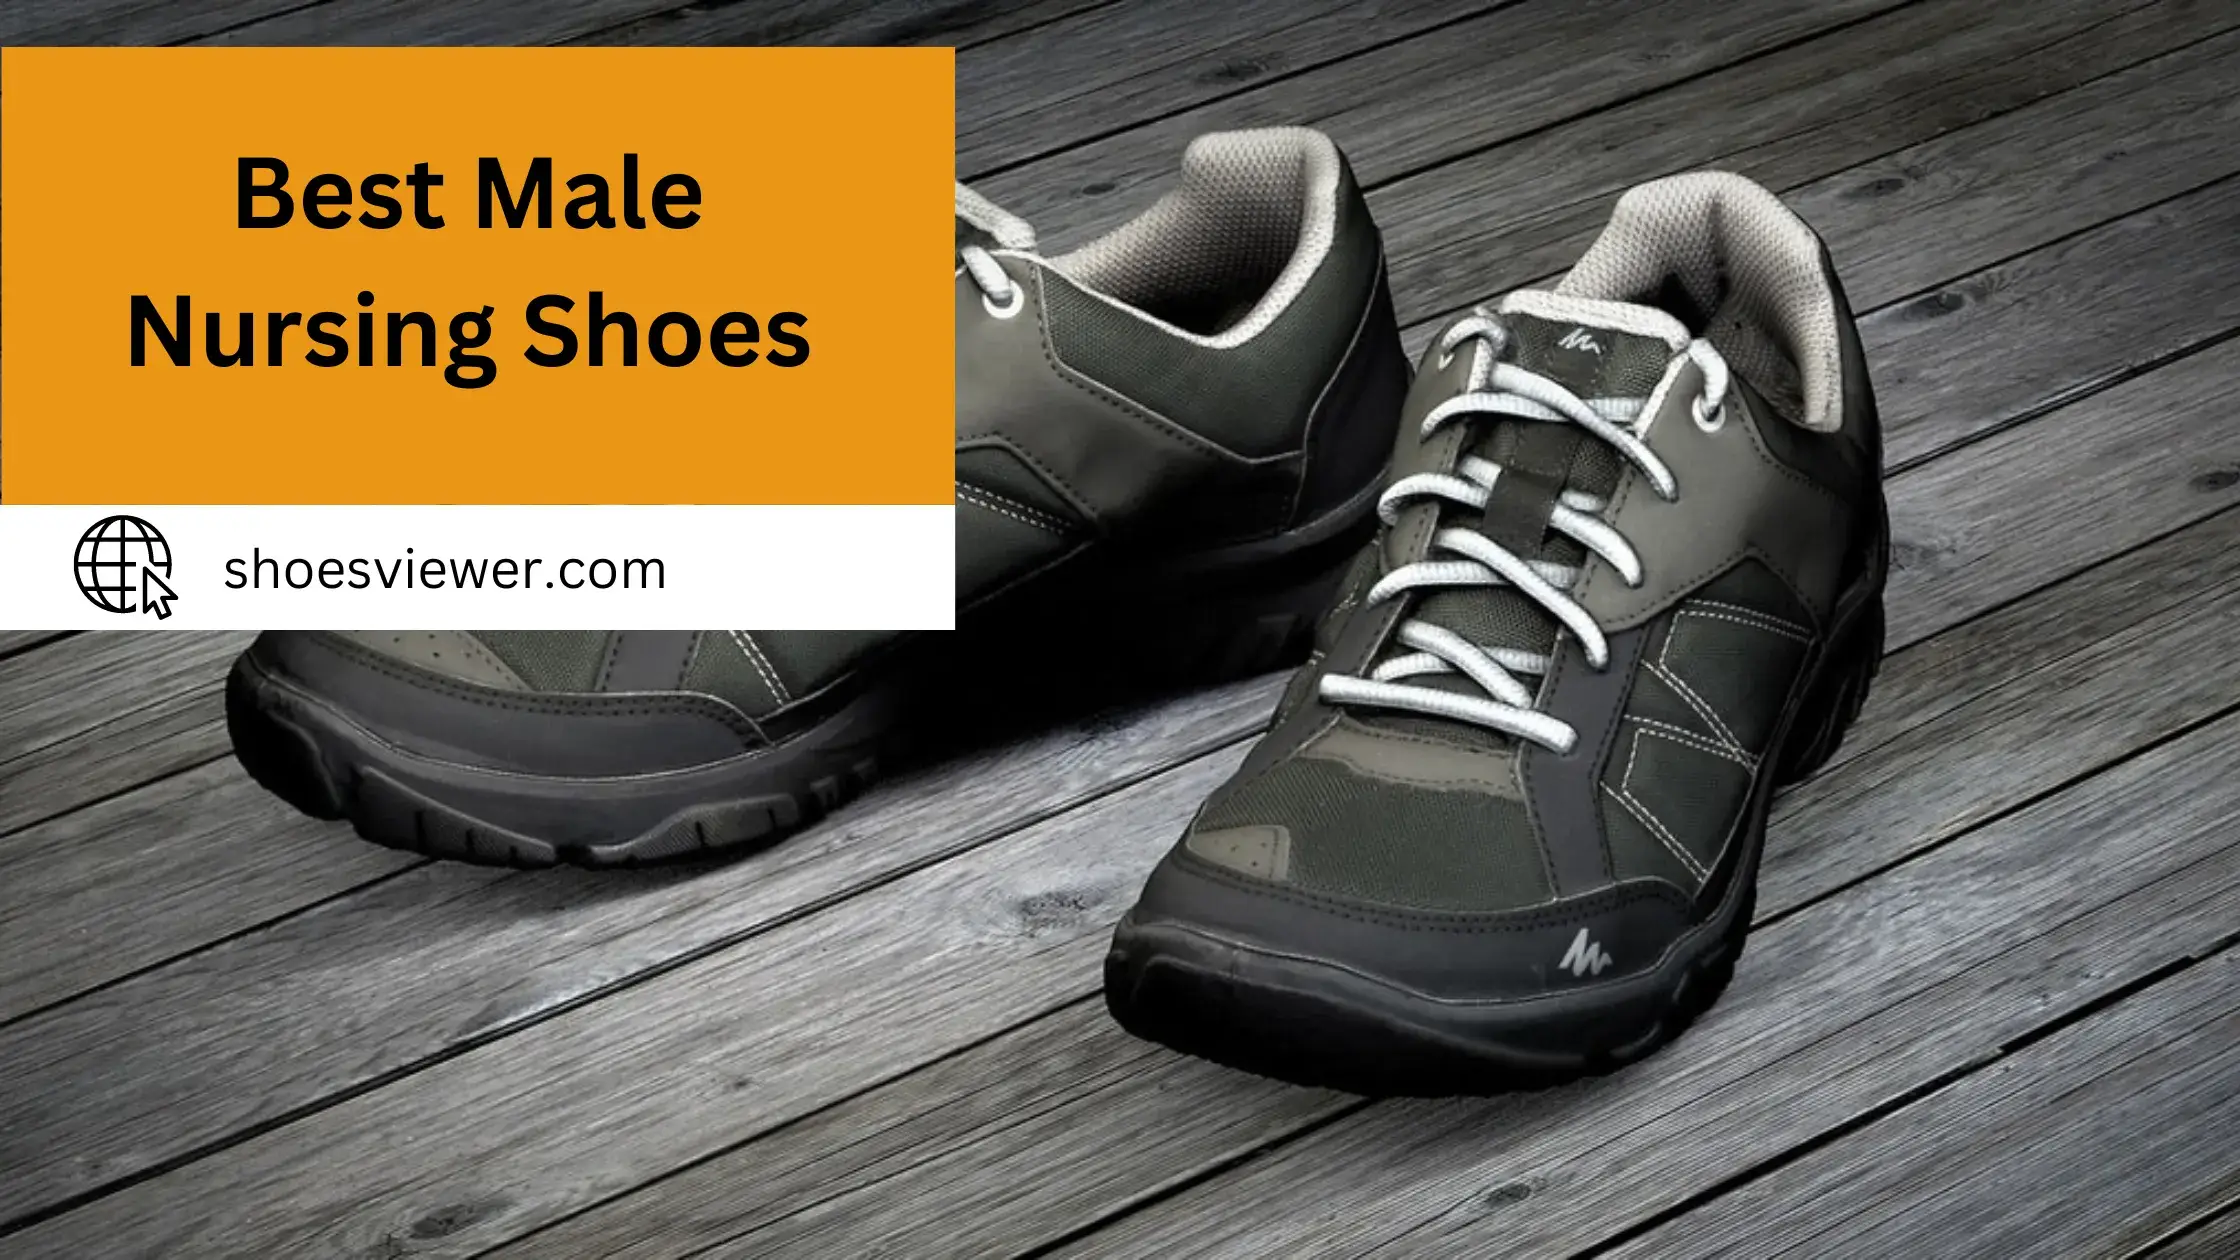 Best Male Nursing Shoes - A Comprehensive Guide